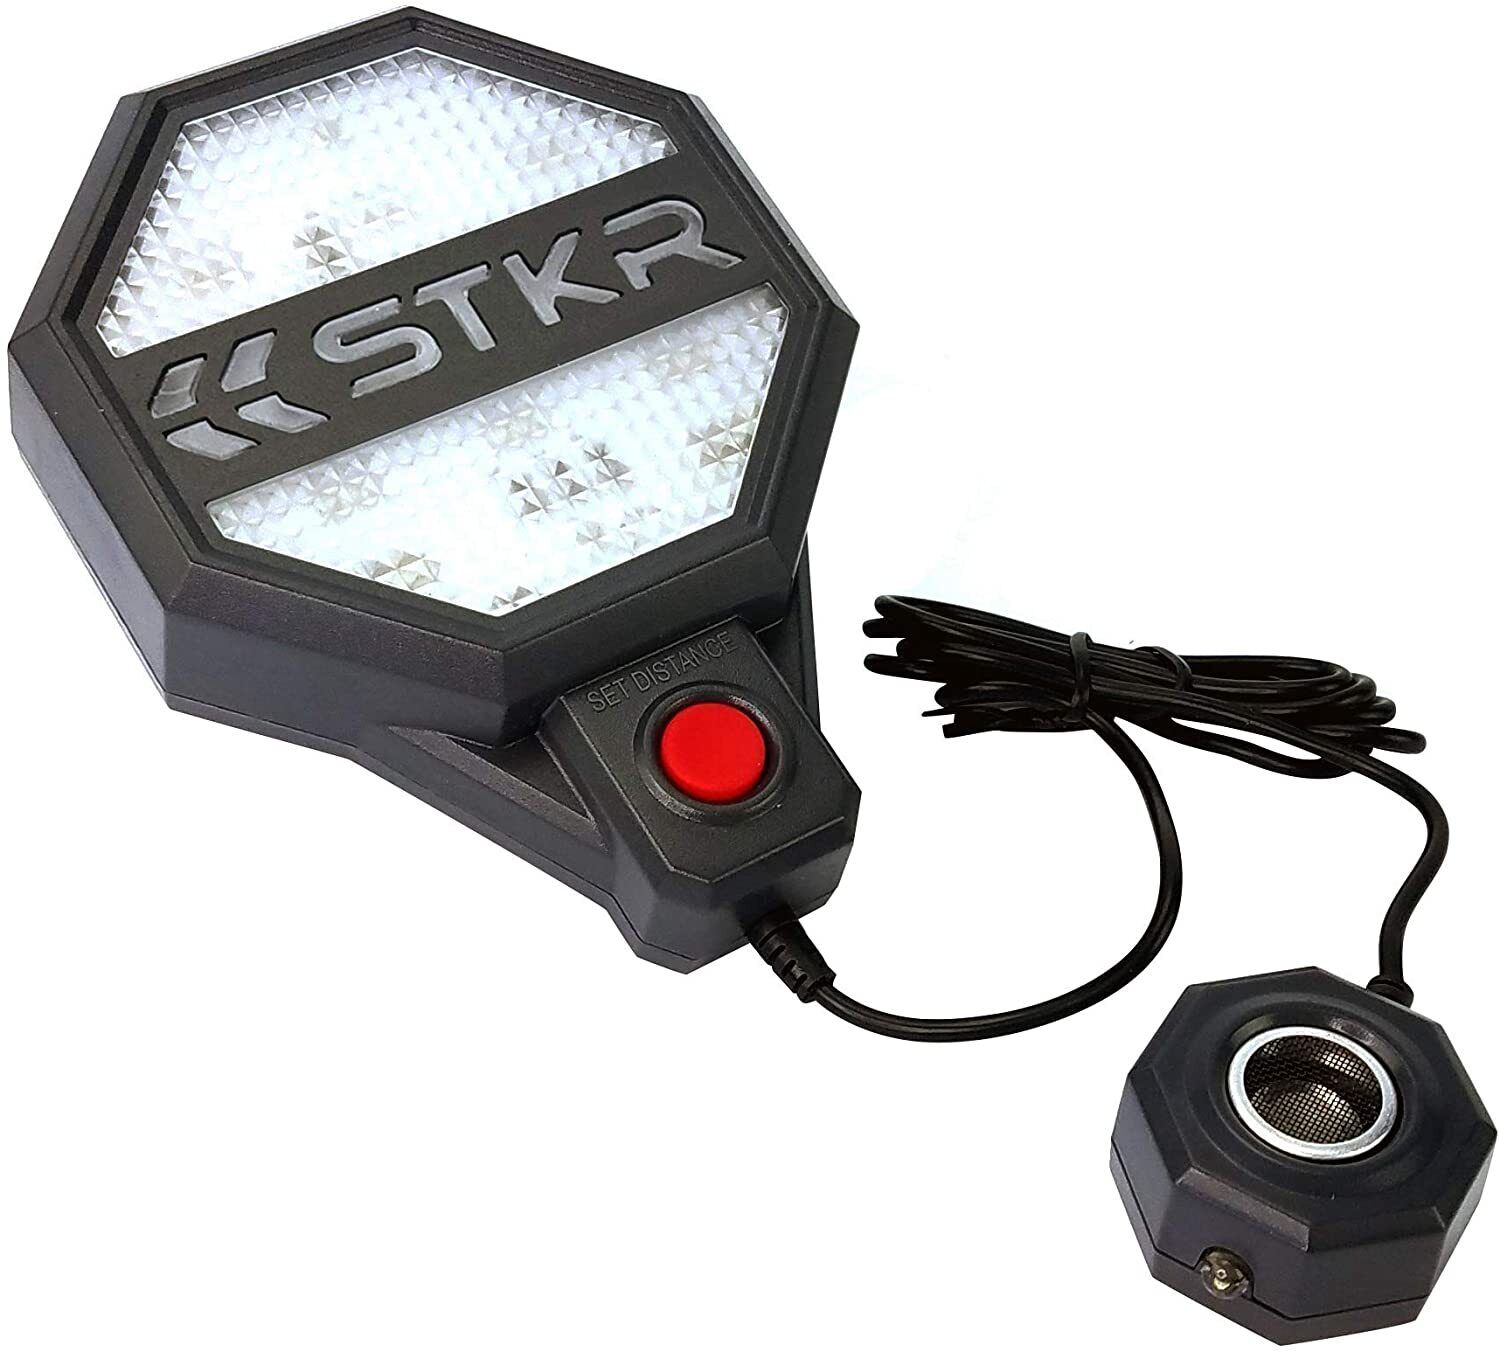 STKR Concepts 00246 Adjustable Garage Parking Sensor Aid, Dark Gray